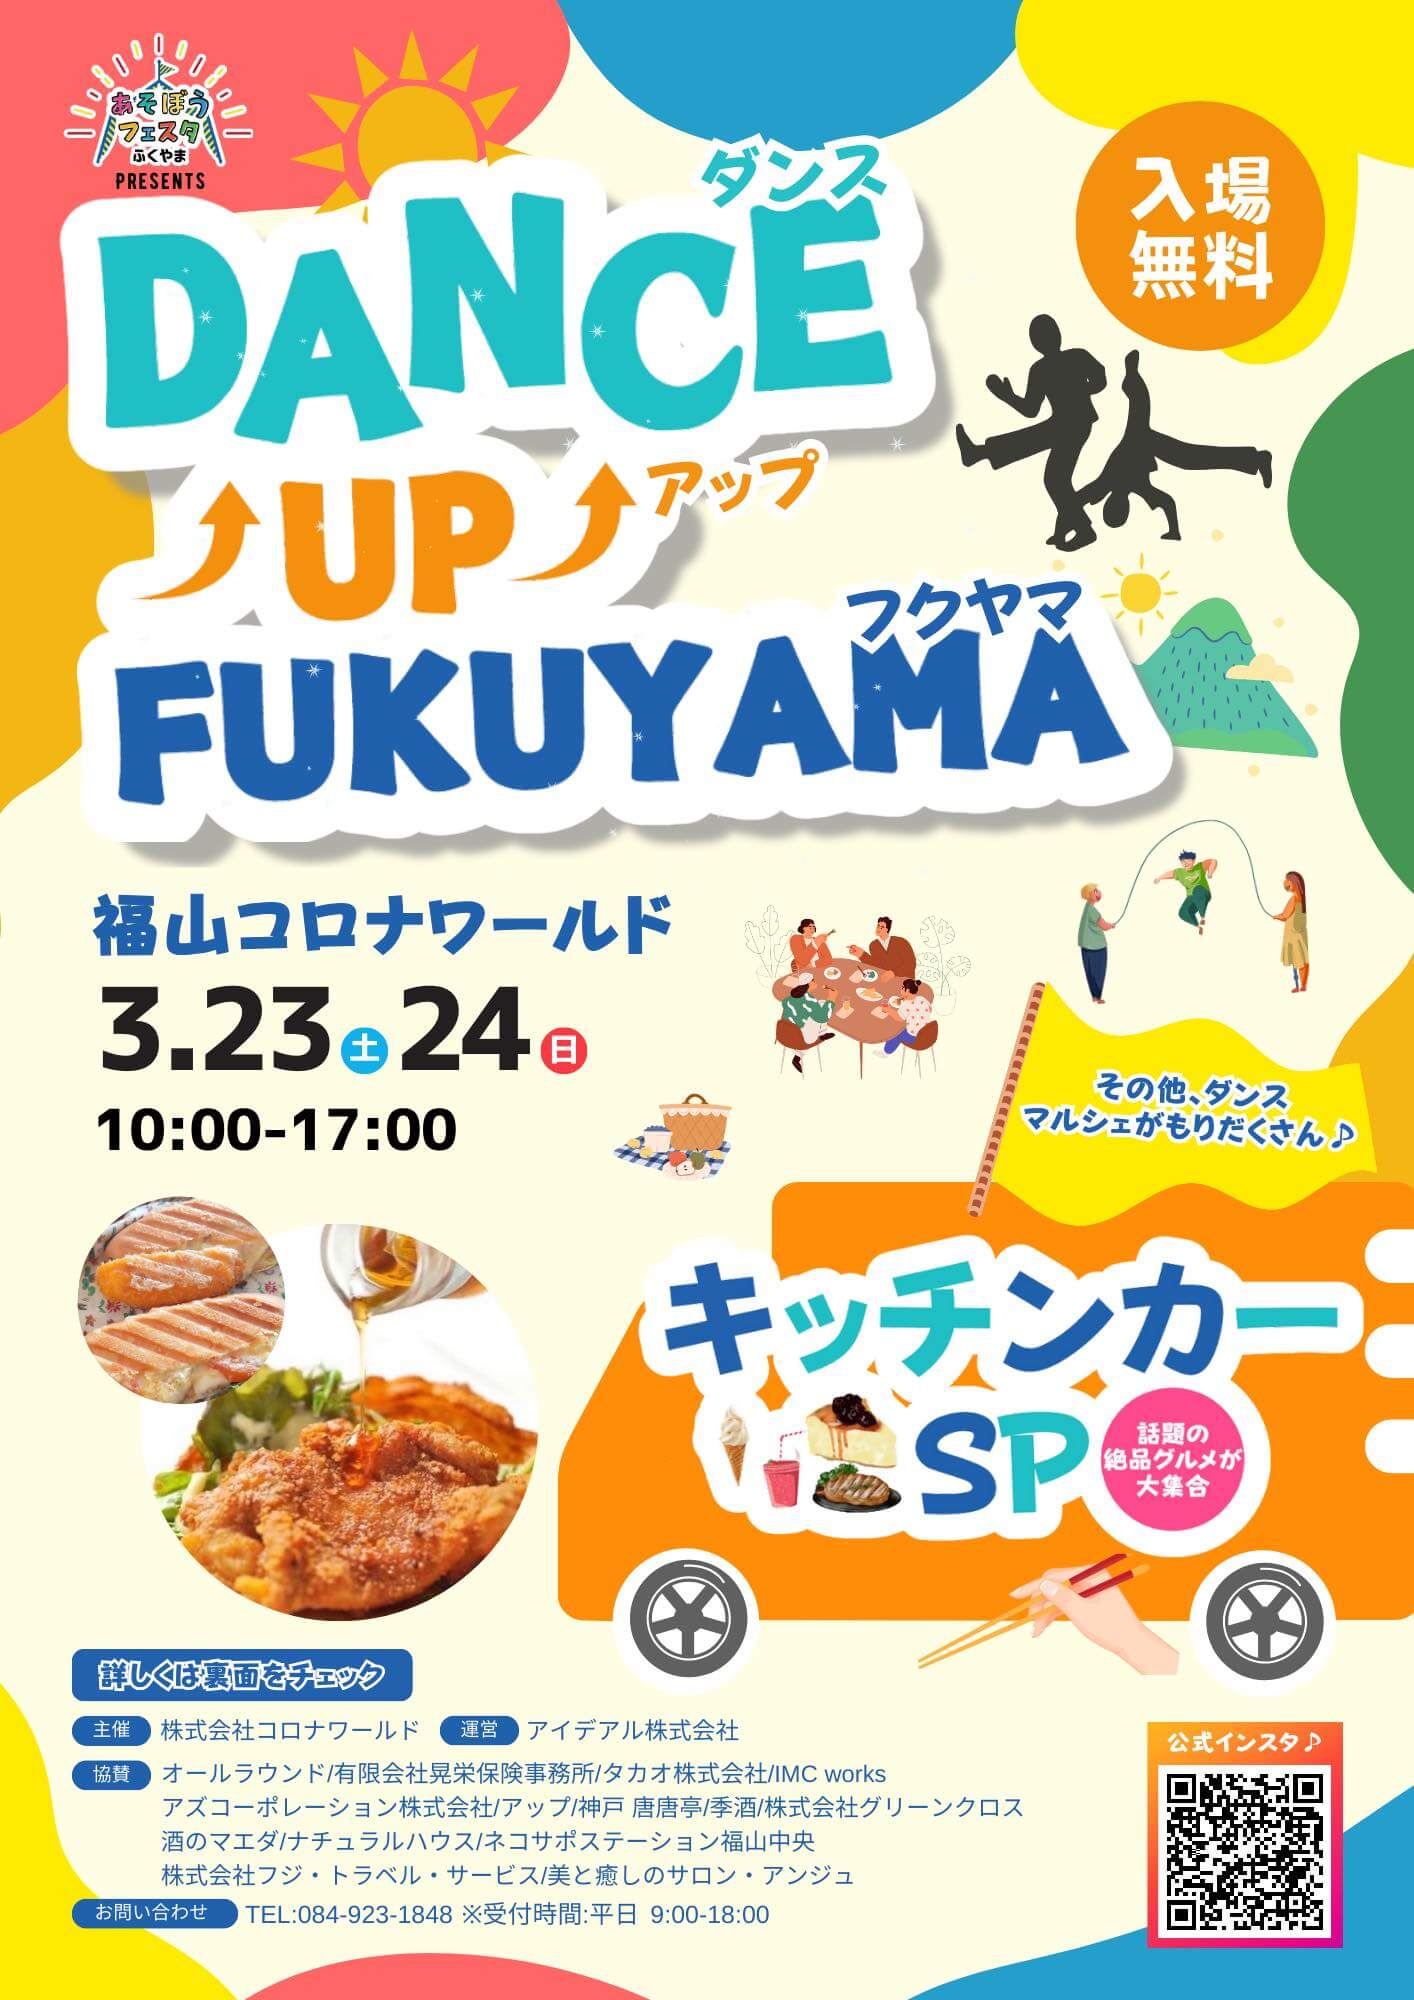 DANCE UP FUKUYAMA